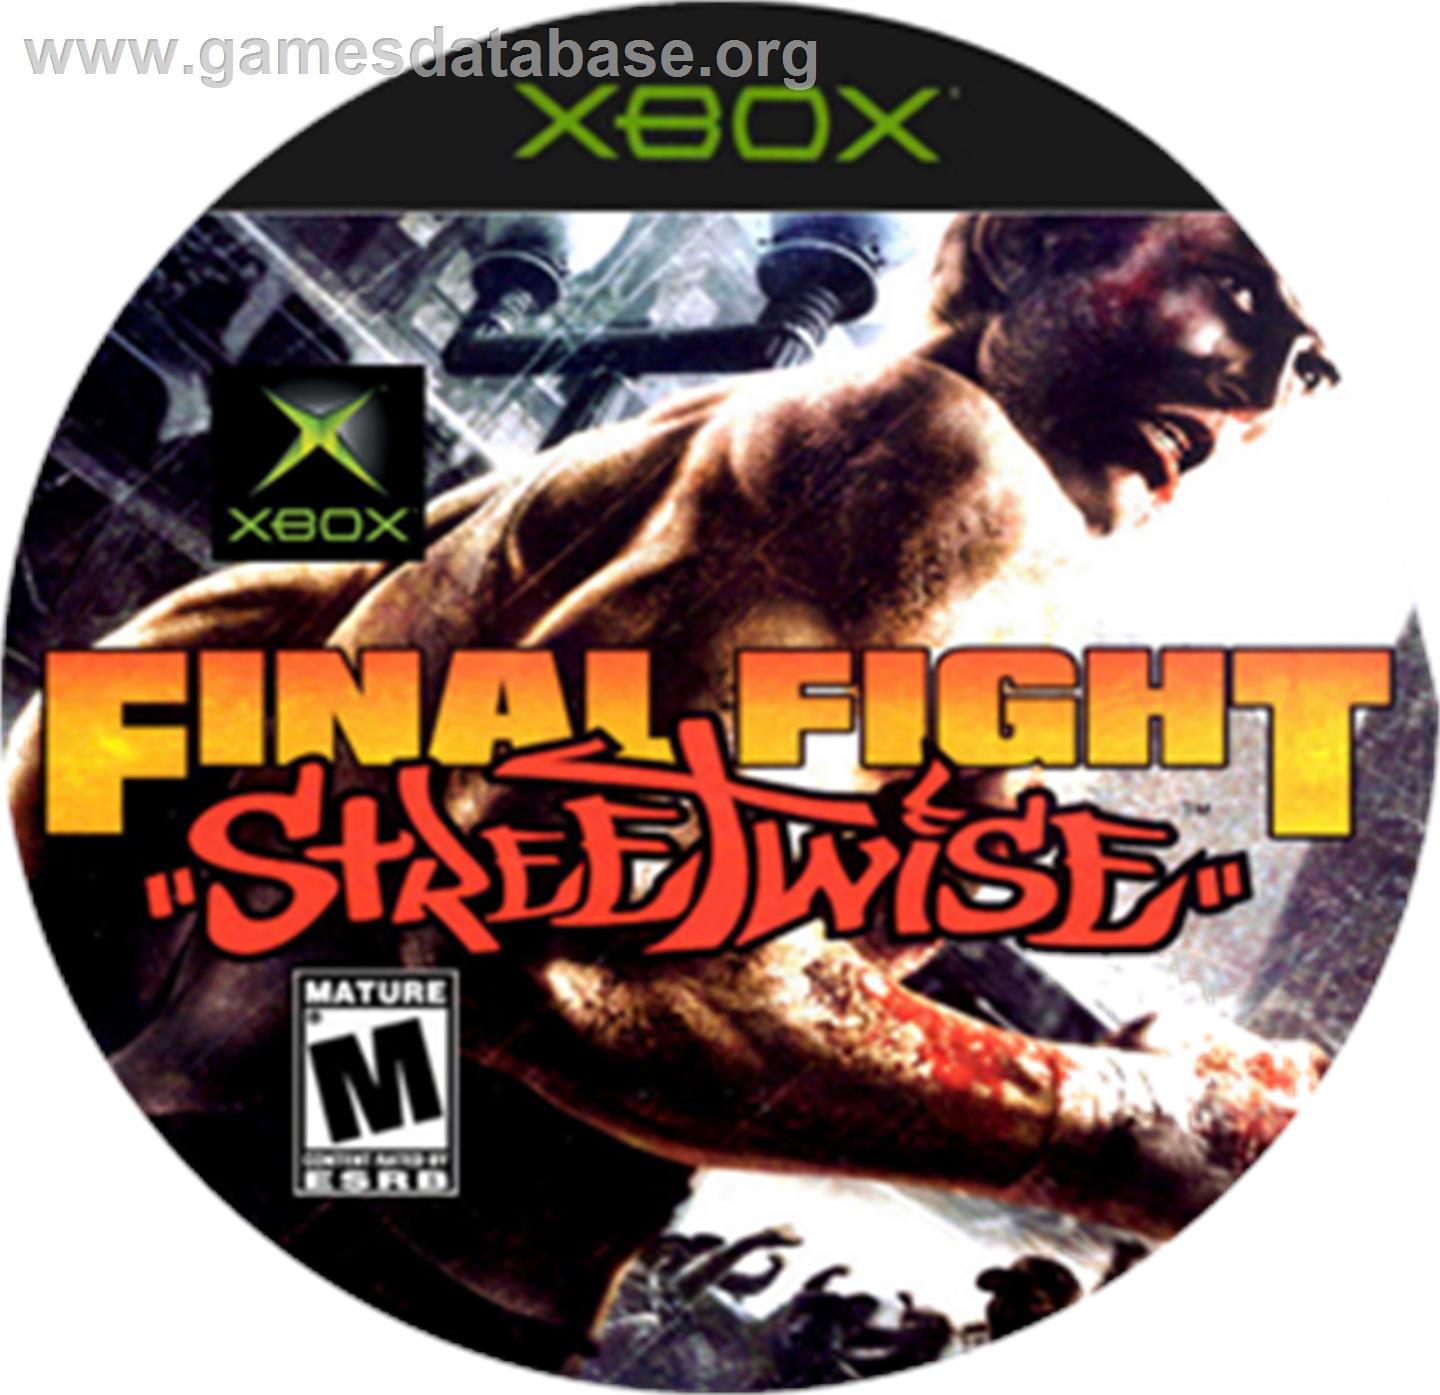 Final Fight: Streetwise - Microsoft Xbox - Artwork - CD